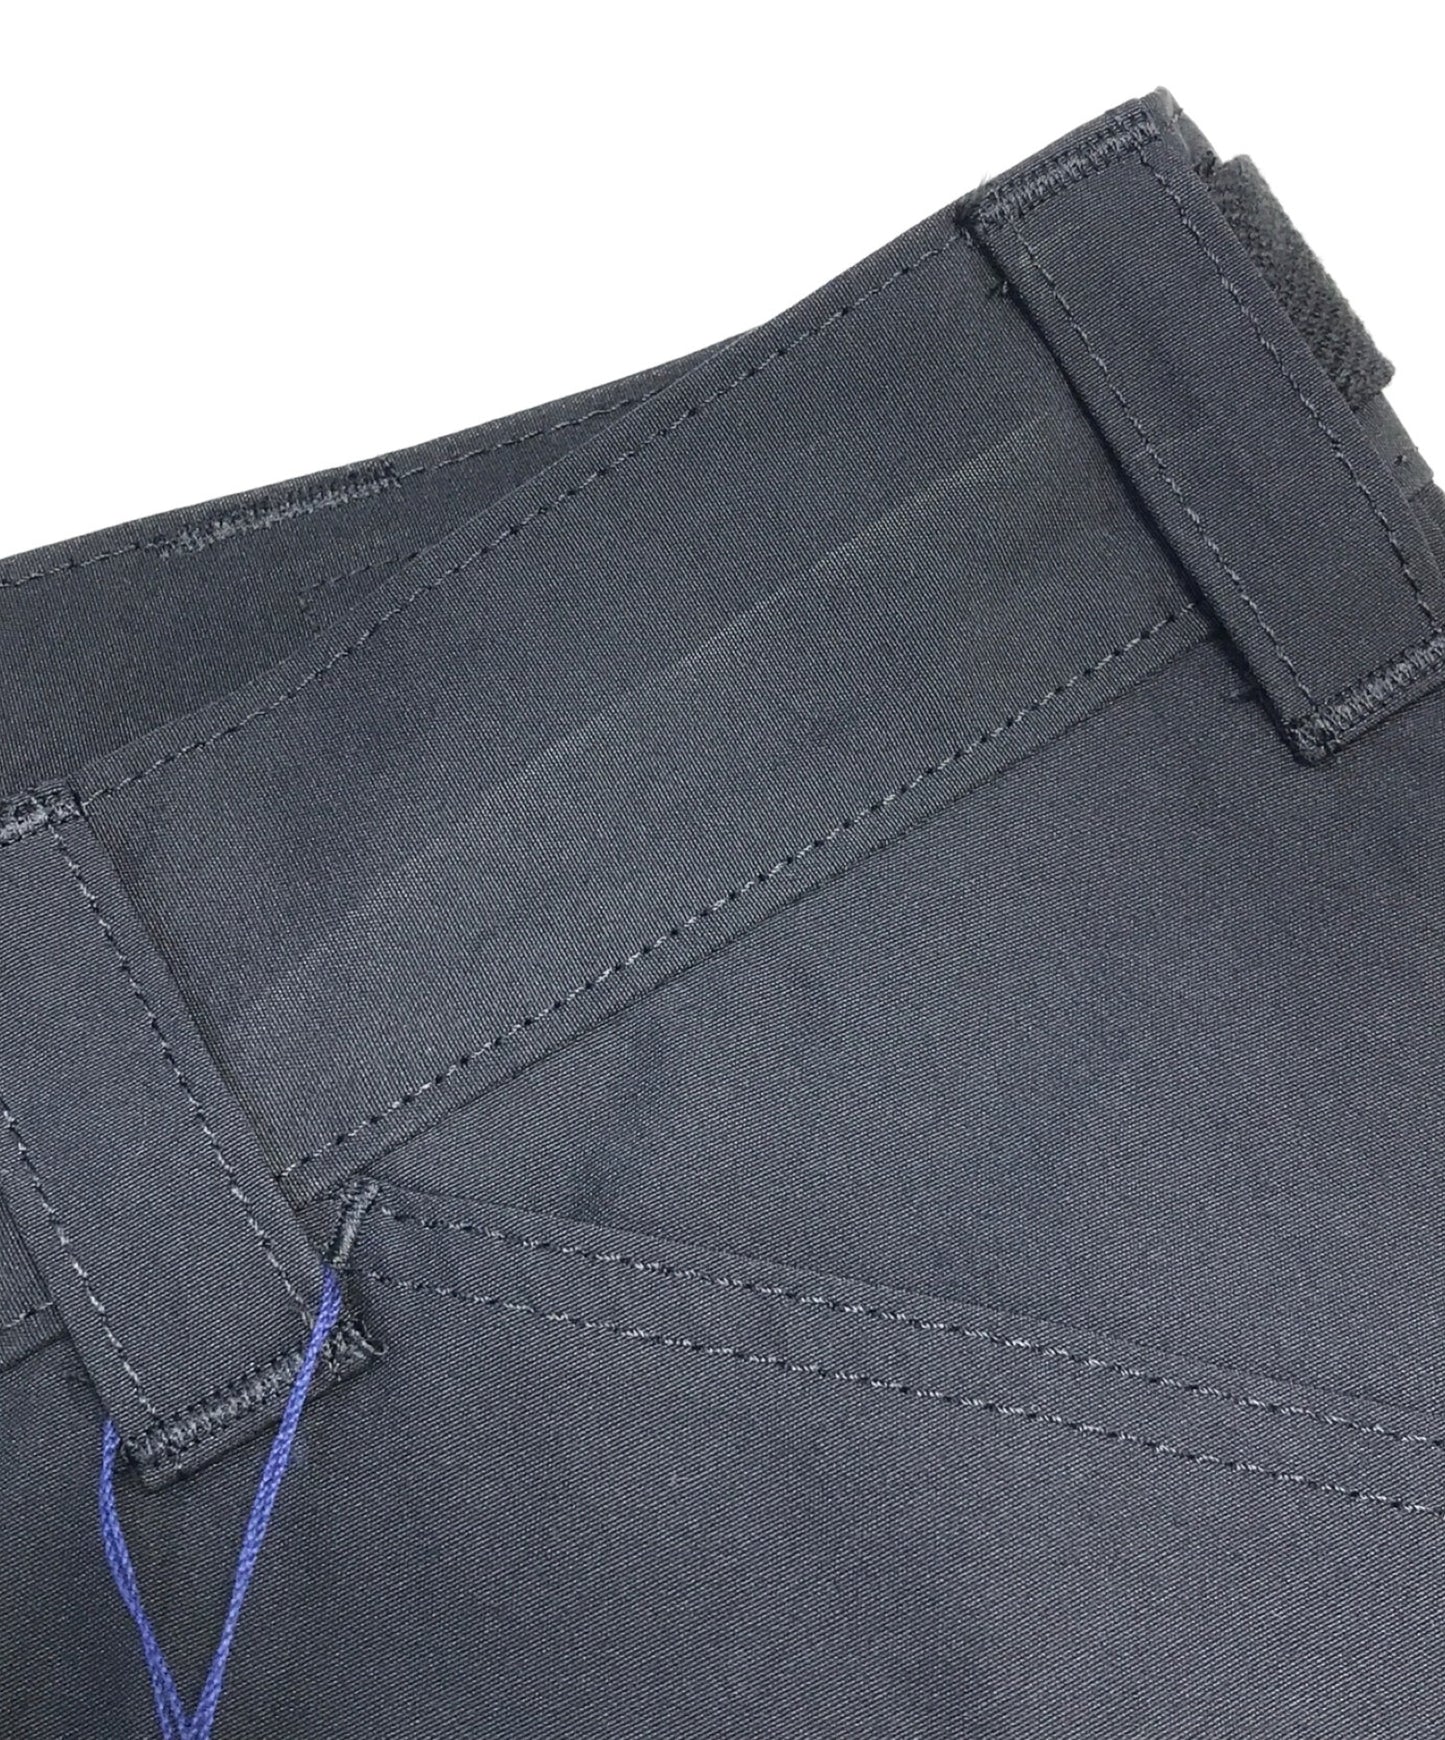 Junya Watanabe Man Multi-Pocket Cargo Pants WB-P024/AD2019